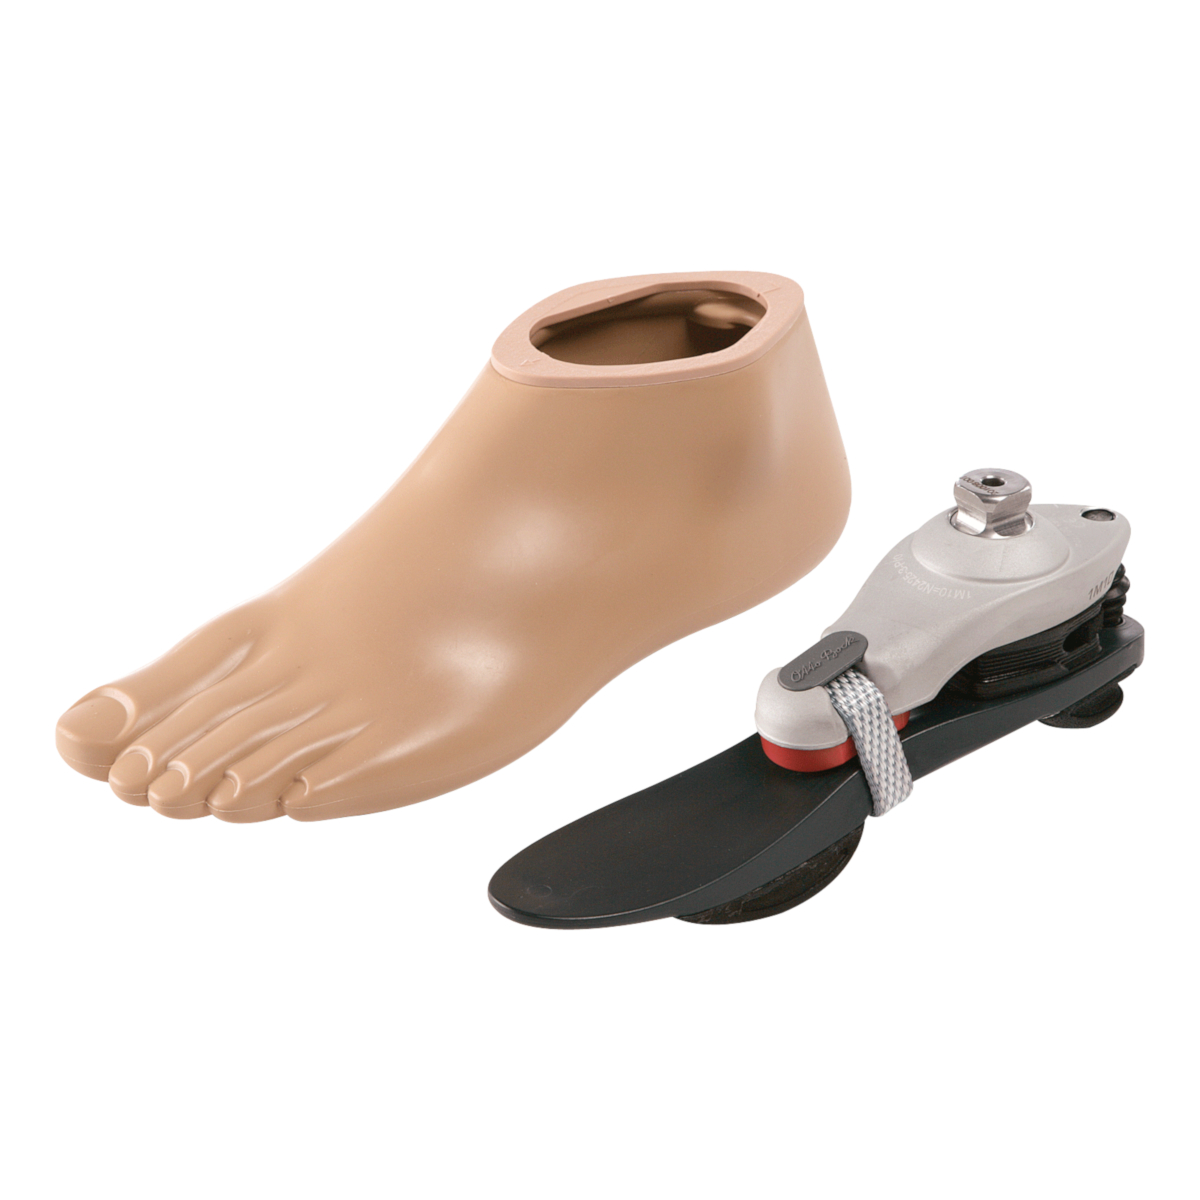 1M10 Adjust incl Footshell | Feet - Mechanical | Lower Limb Prosthetics |  Prosthetics | Ottobock US Shop | Möbelfüße